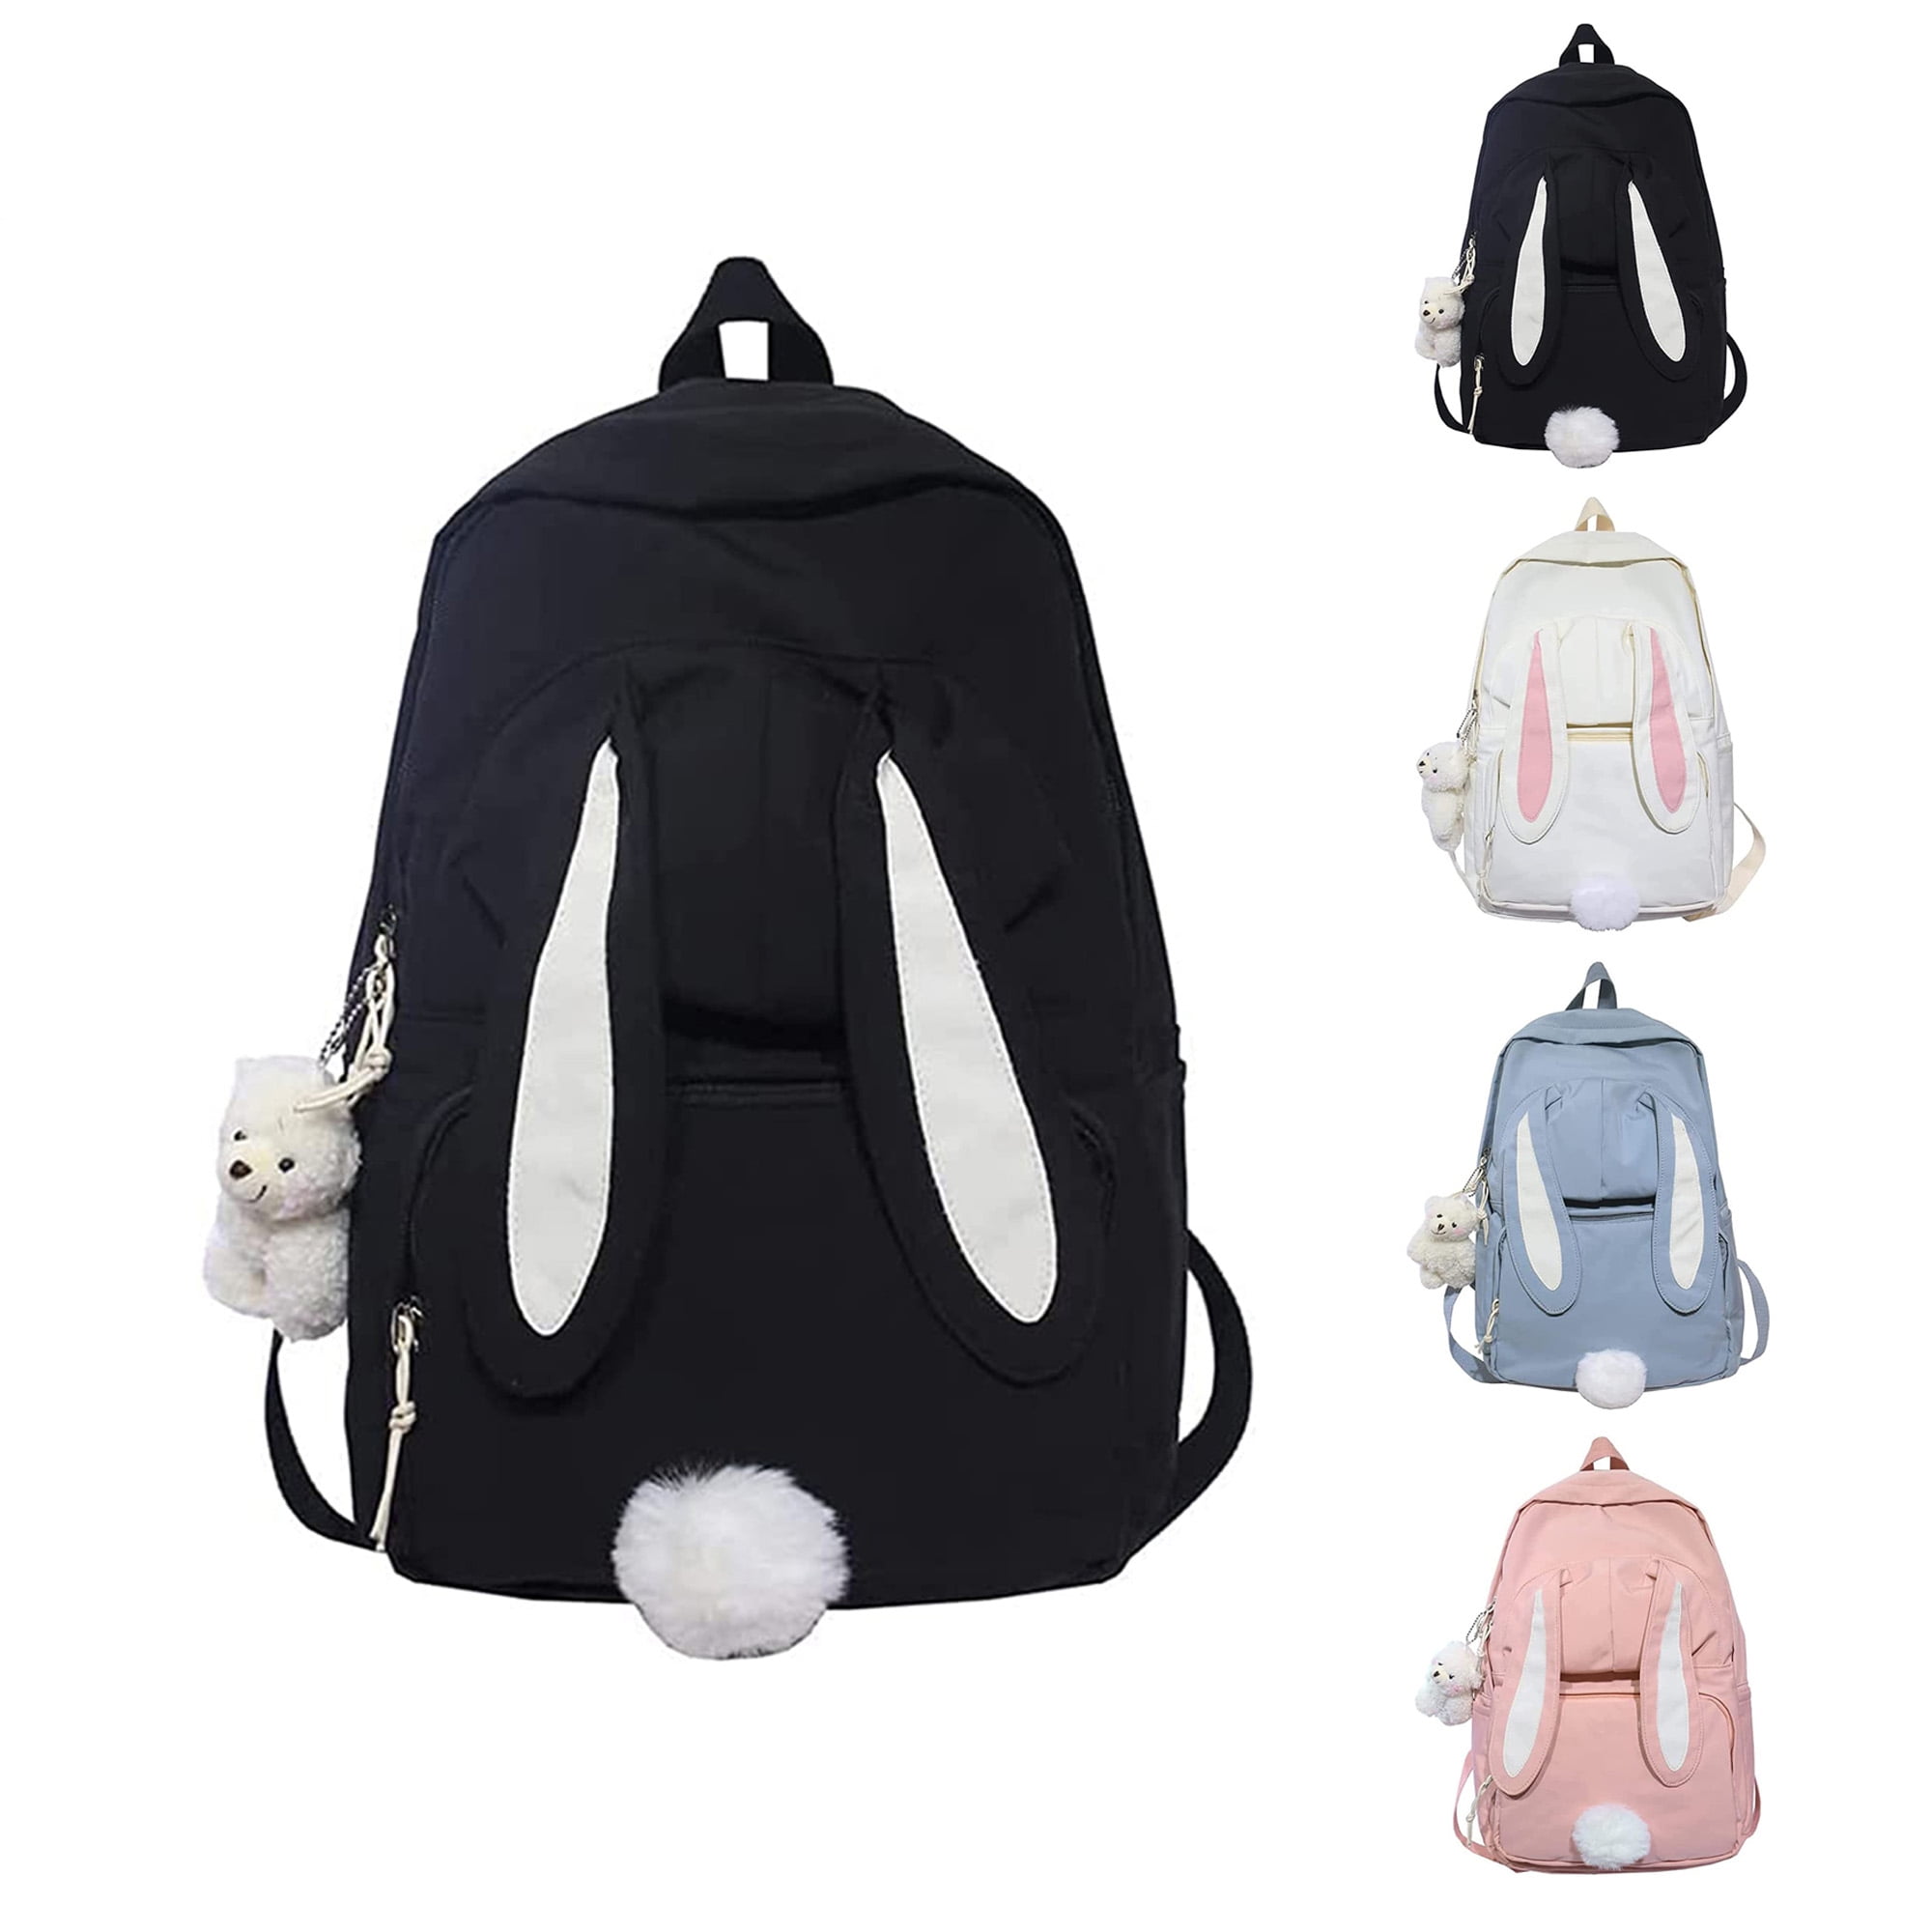 Kawaii Rabbit Ear Backpack for Teen Girls Student School Bag,Black